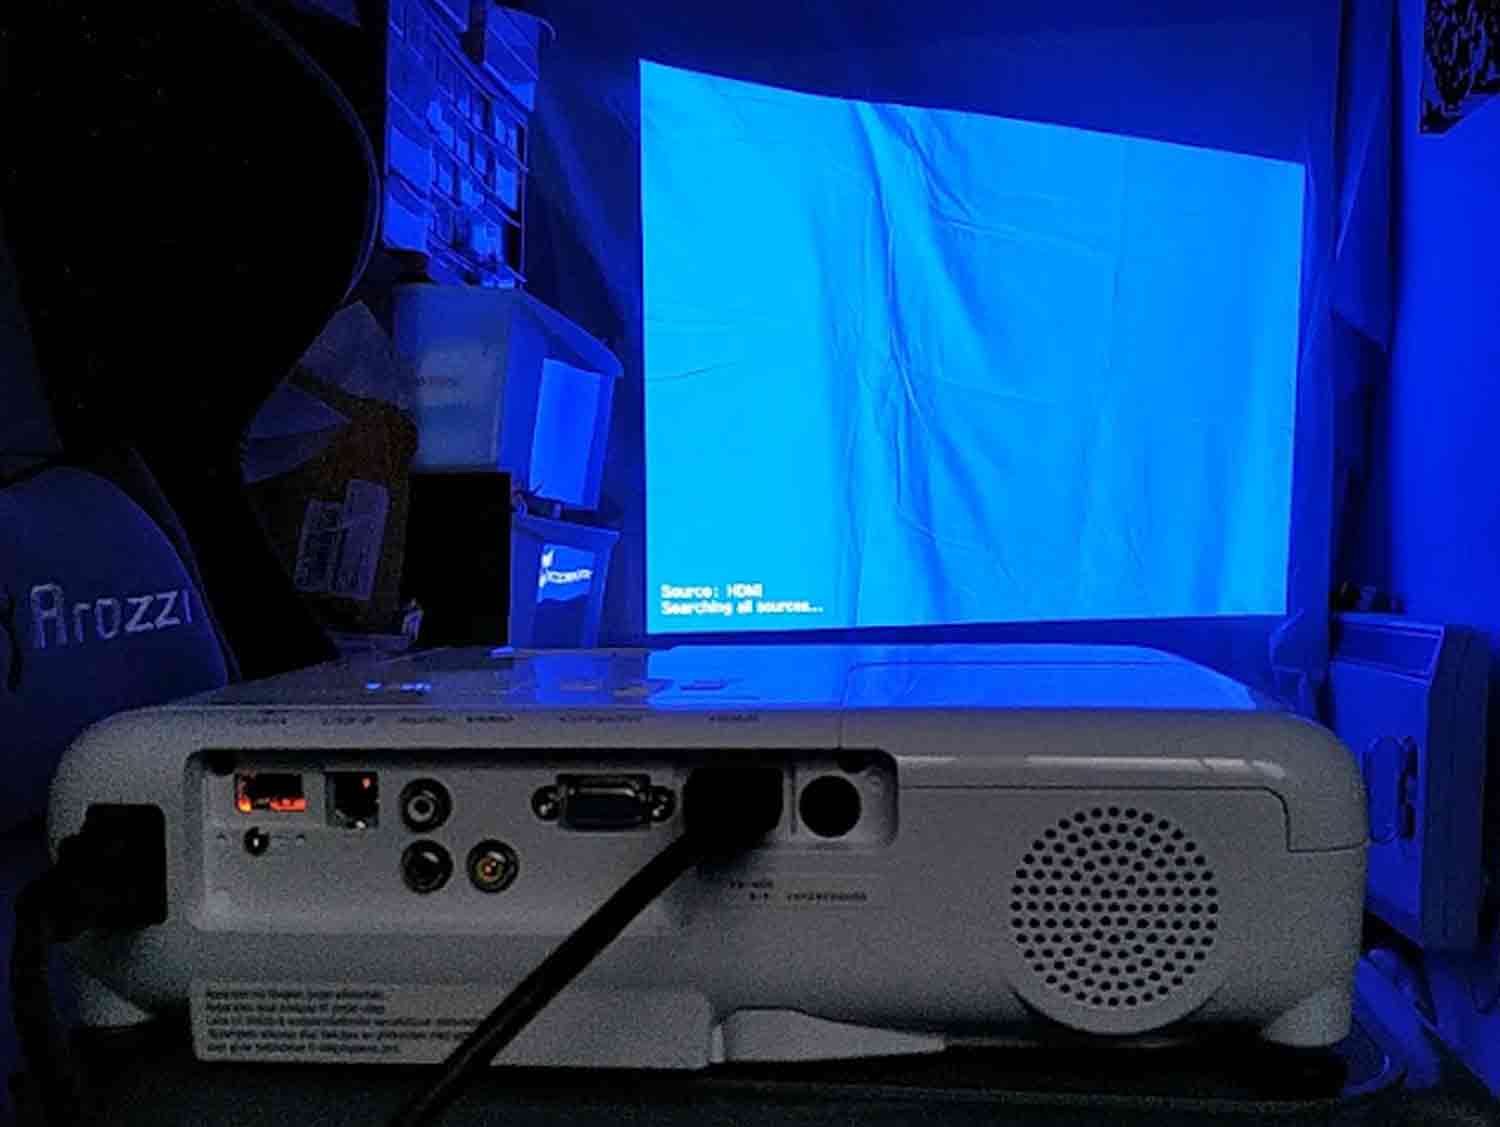 Epson EB-W05 WXGA Projector